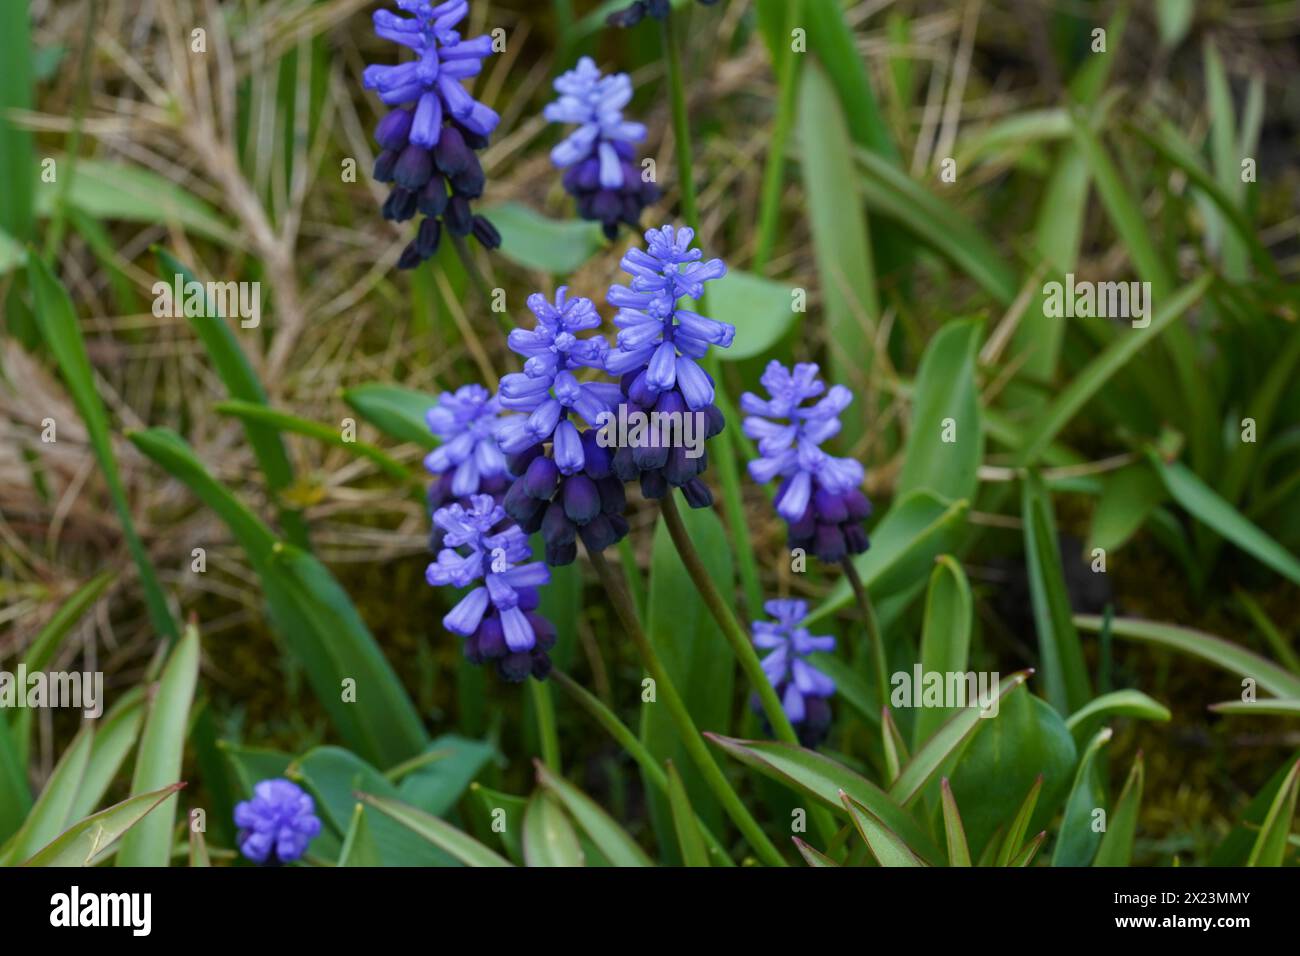 Grape Hyacinth Bulbs in Latin called Muscari Latifolium growing in a colony. Stock Photo